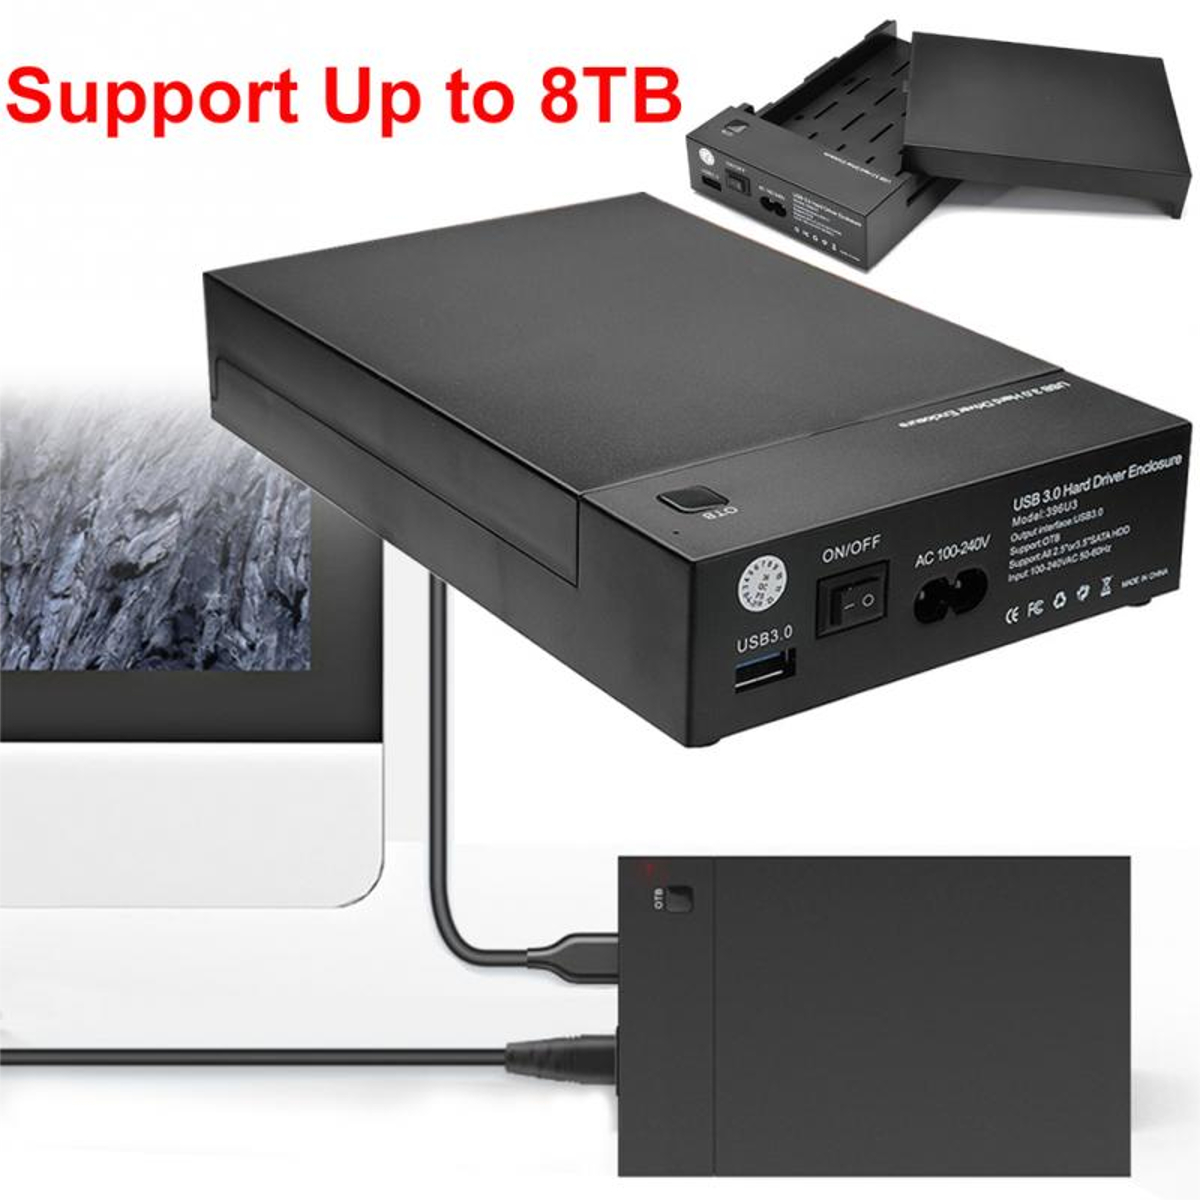 USB3.0 To SATA Serial Hard Disk External Box Enclosure Case For 2.5/3.5 inch HDD SSD Hard Drive 12